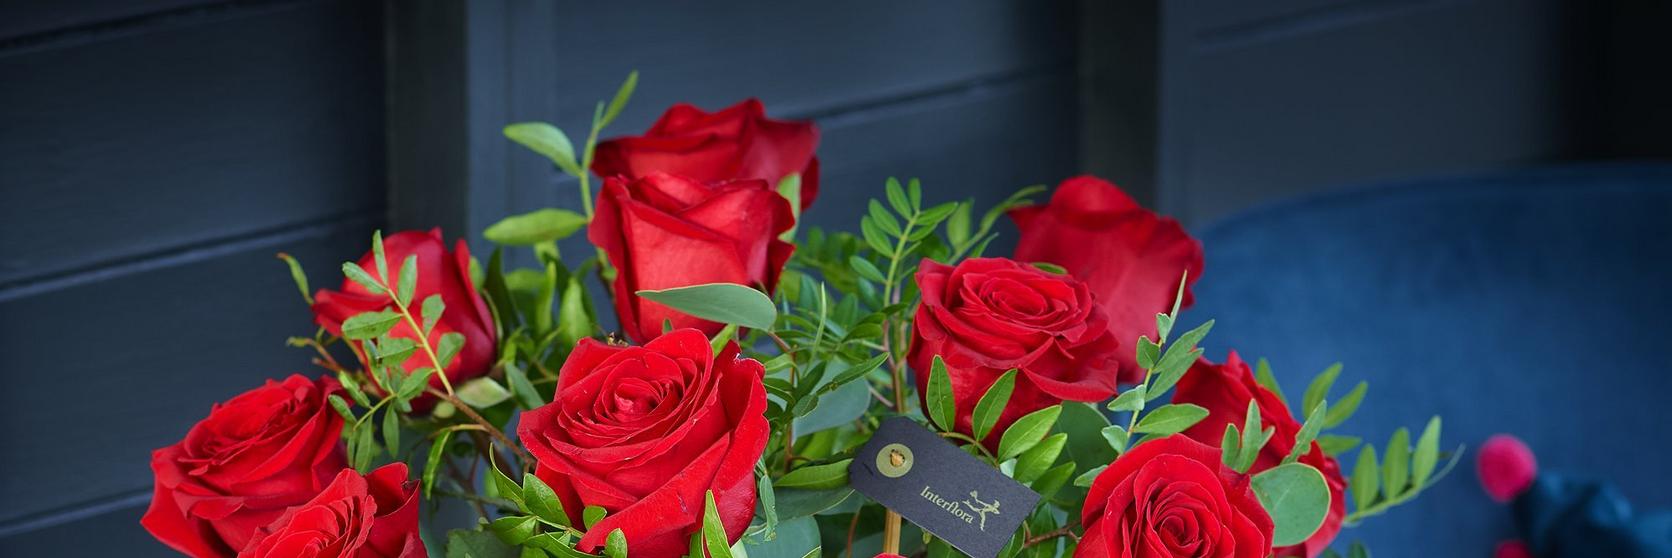 luxury-dozen-red-roses-in-vase-VRRVASE